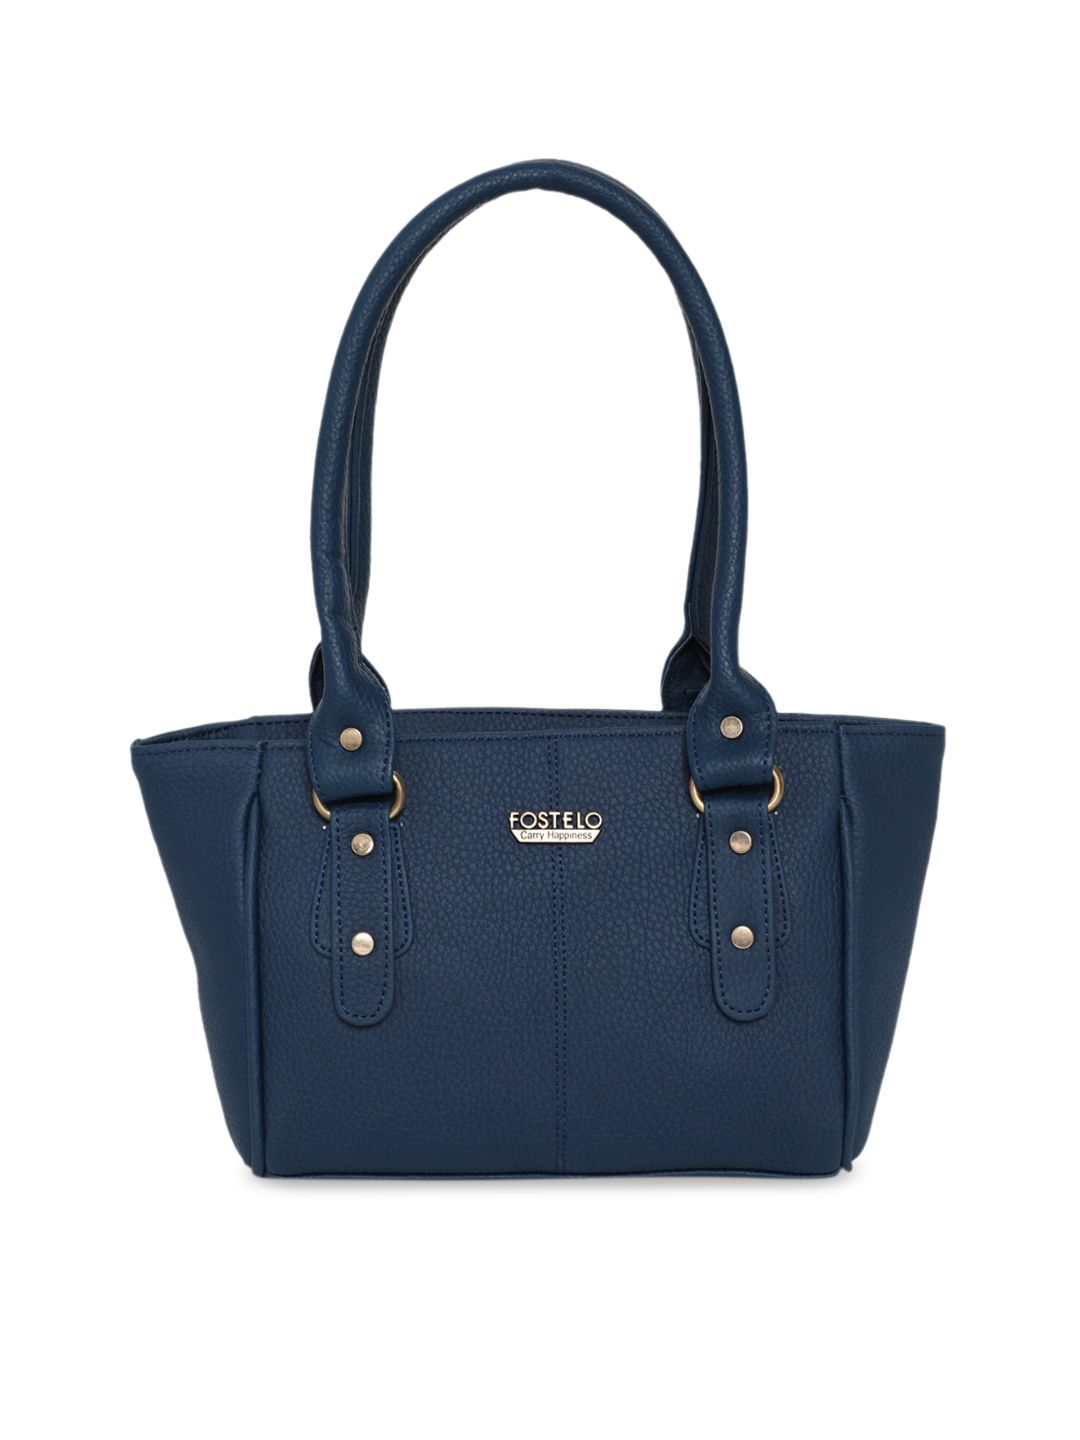 Fostelo Women Blue Structured Shoulder Bag Price in India